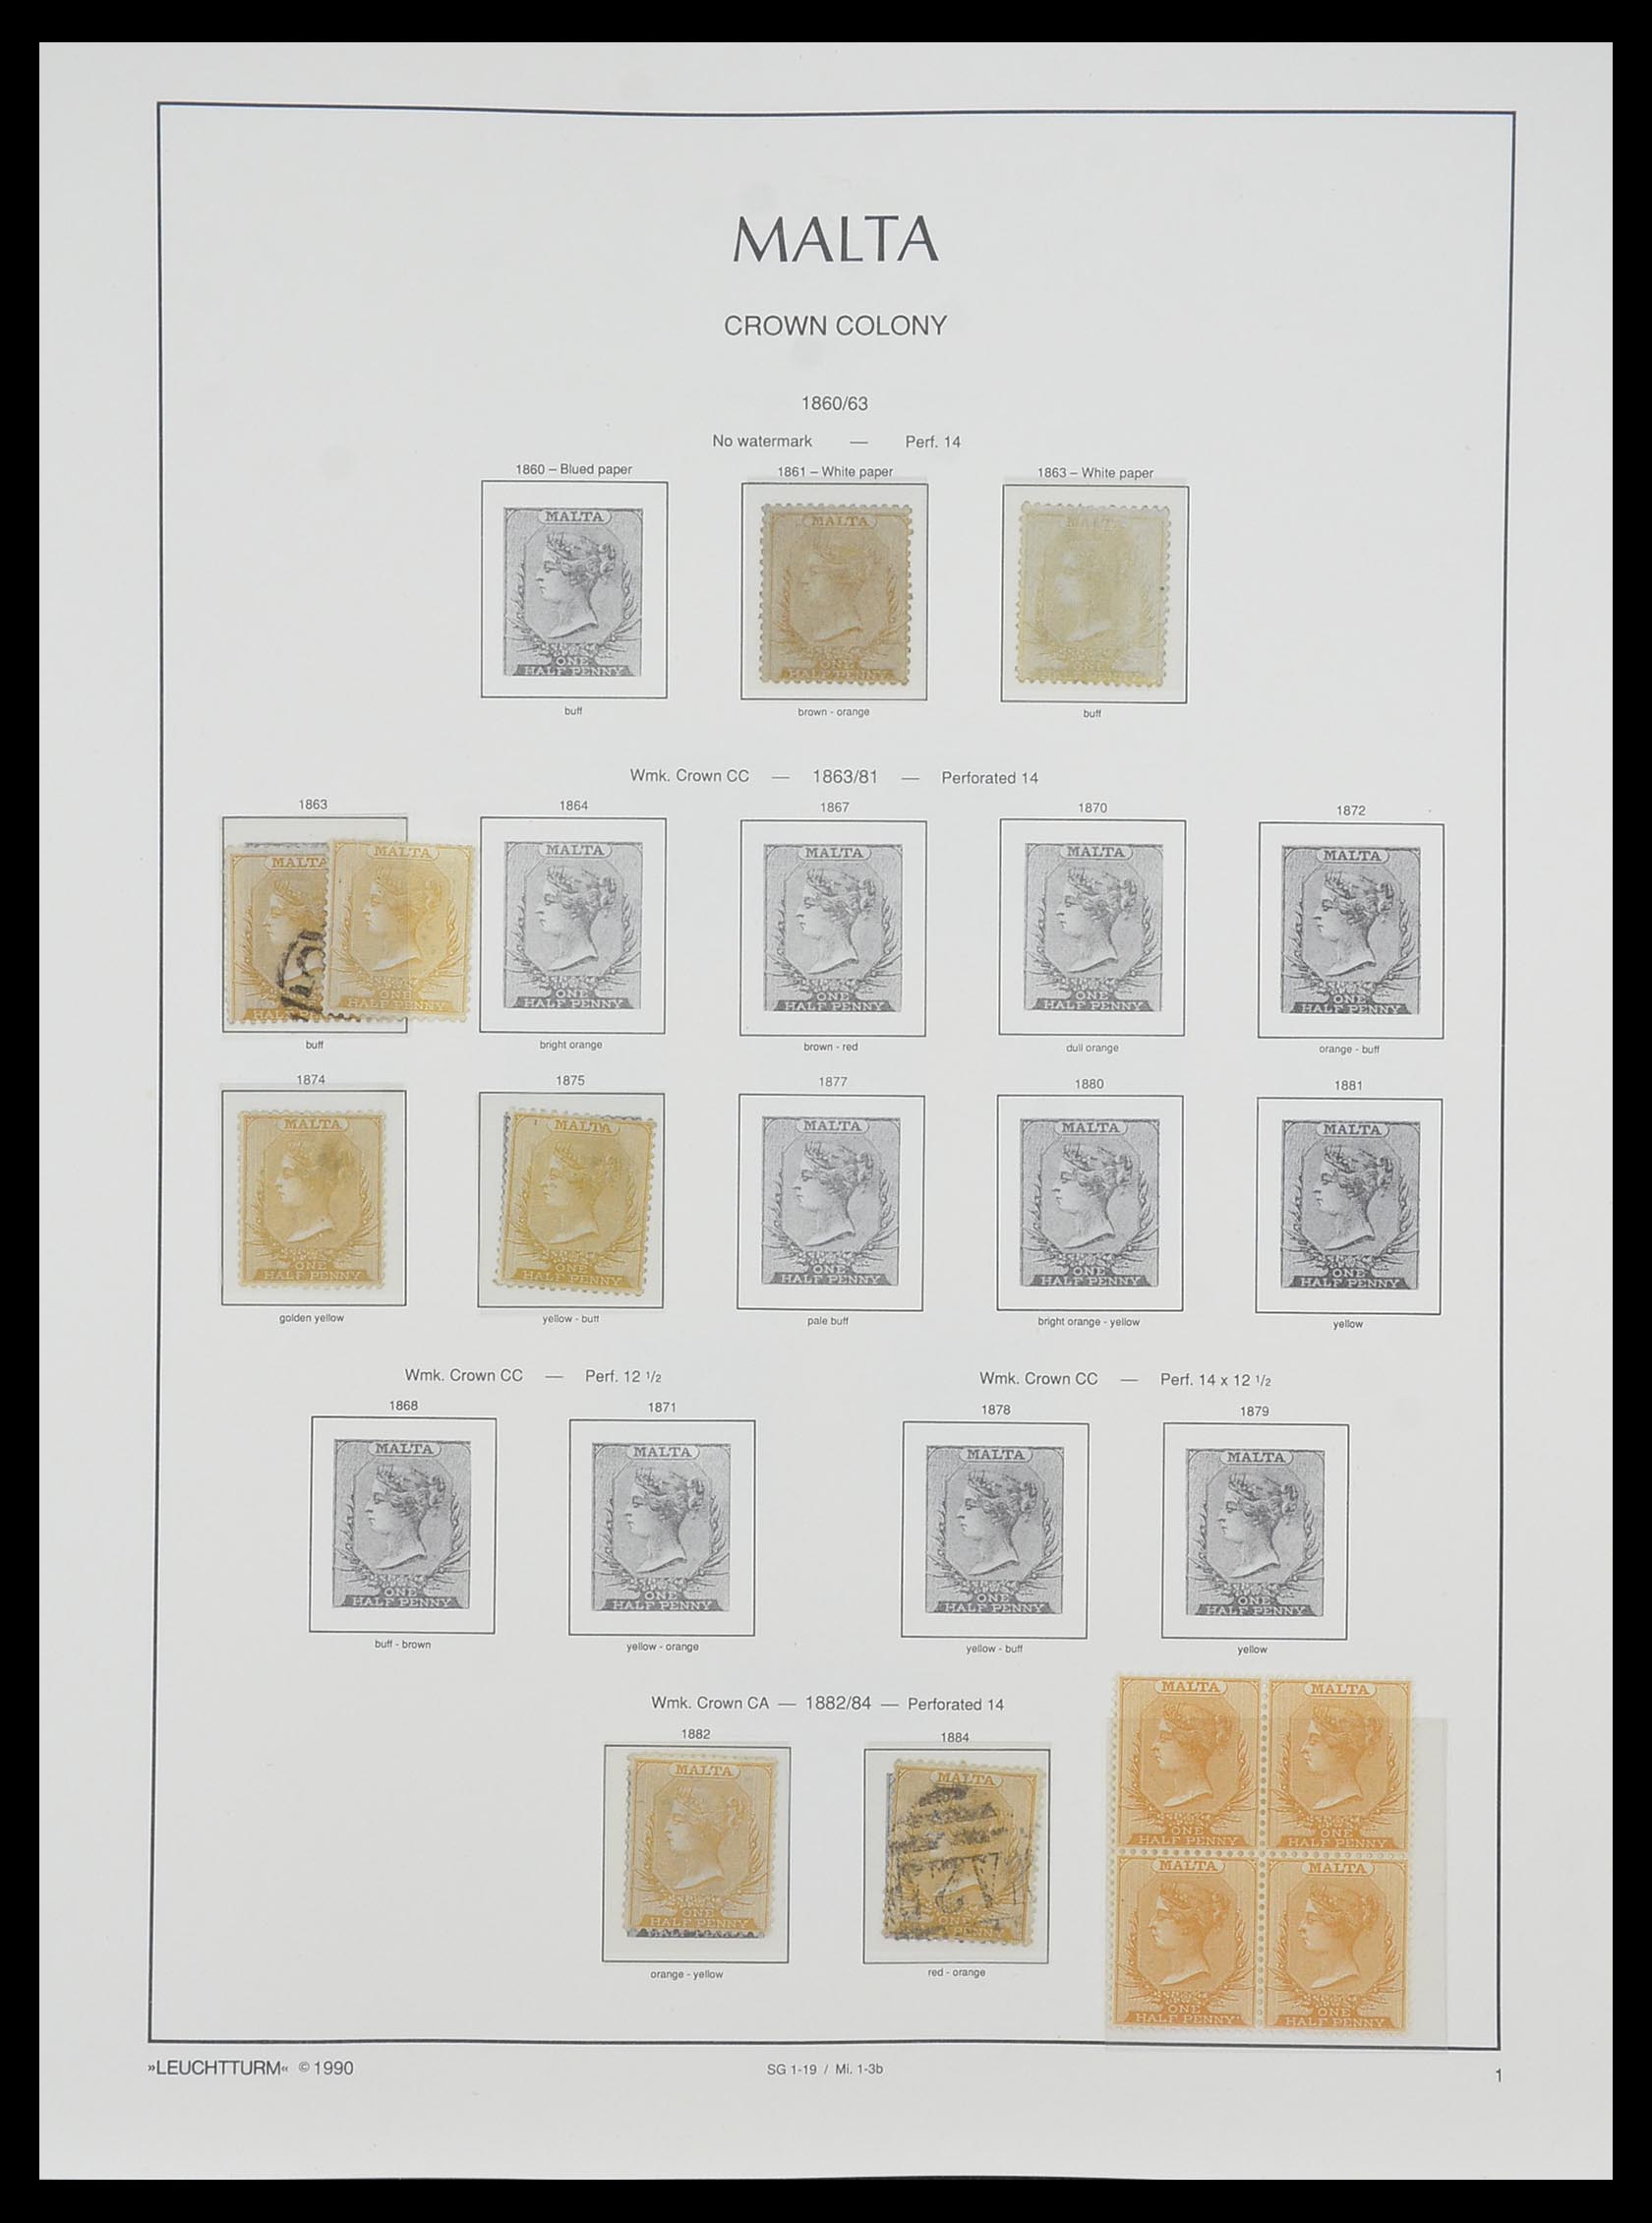 33968 001 - Stamp collection 33968 Malta 1861-2001.